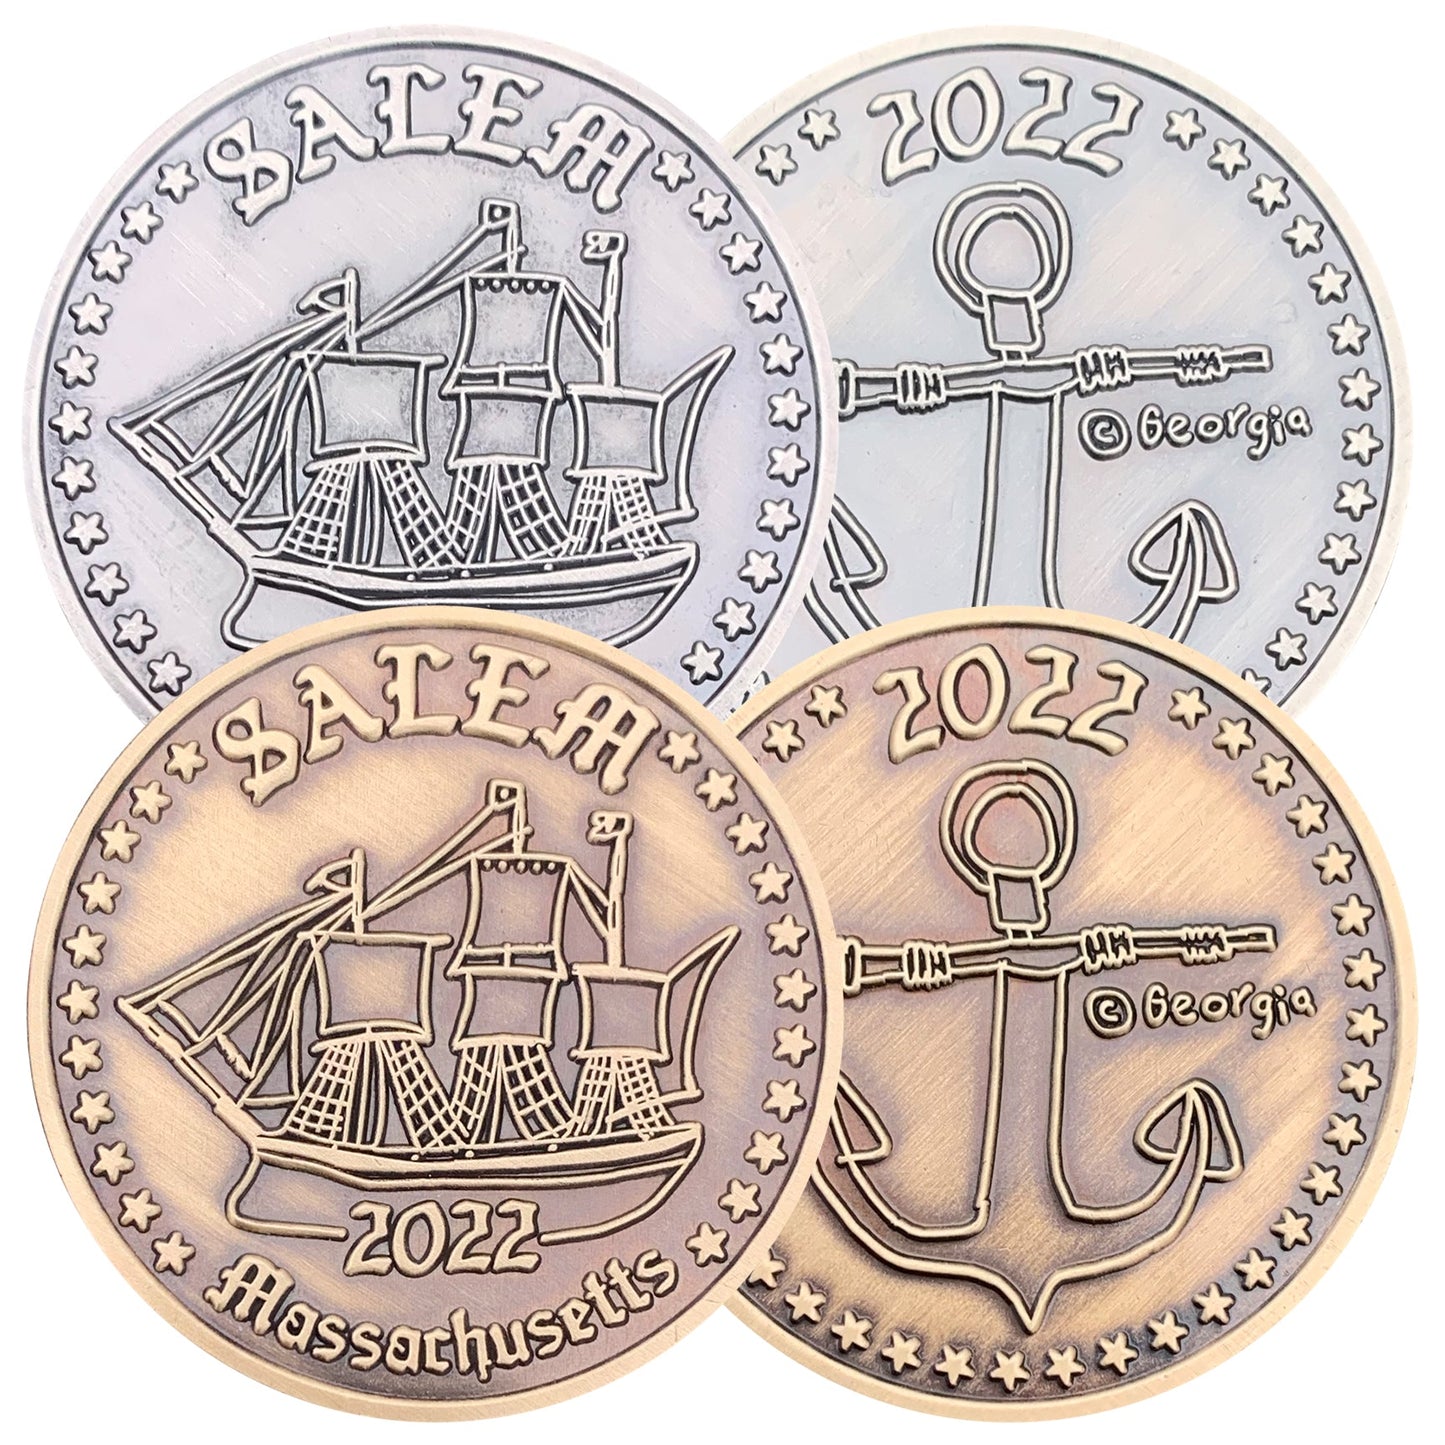 Salem, Massachusetts 2022 Commemorative Coin